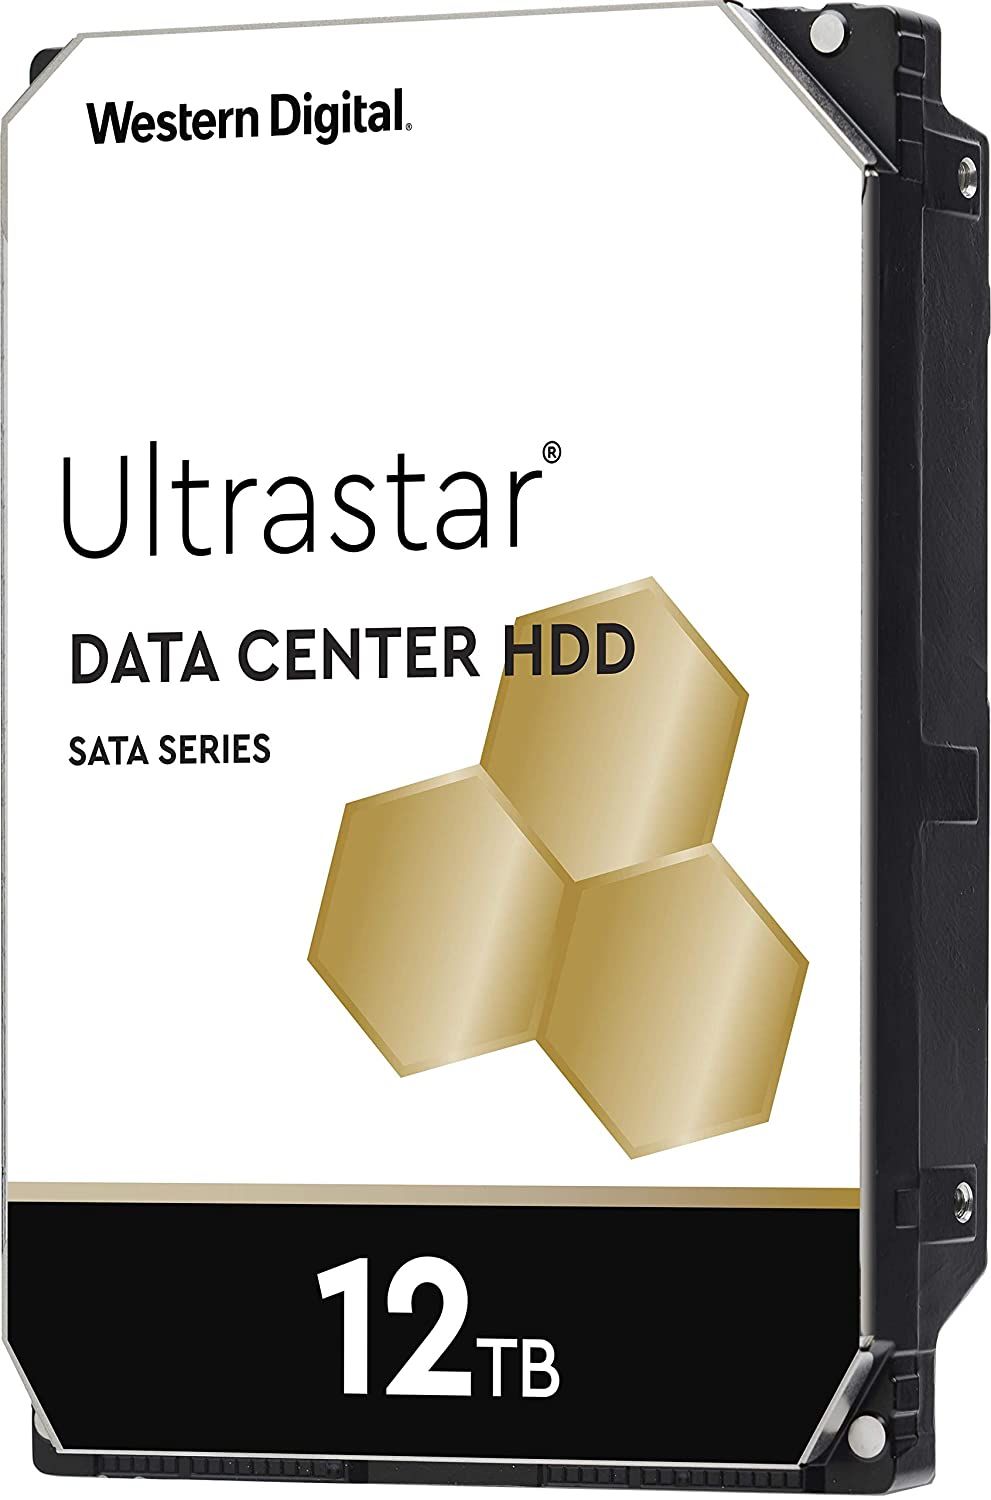 Western Digital Ultrastar data center hdd